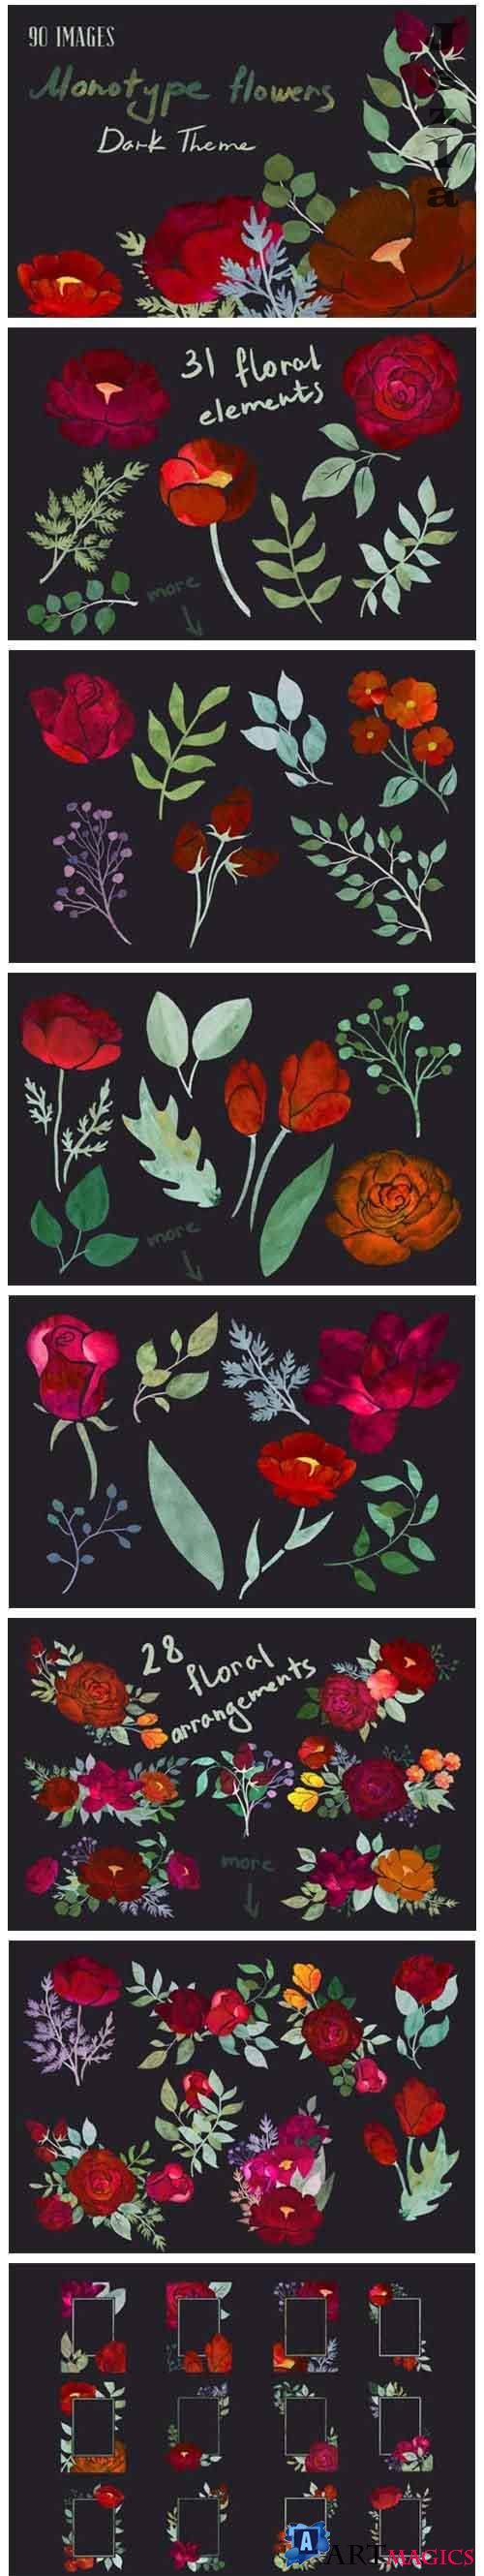 Dark Theme Monotype Flowers - 5024093